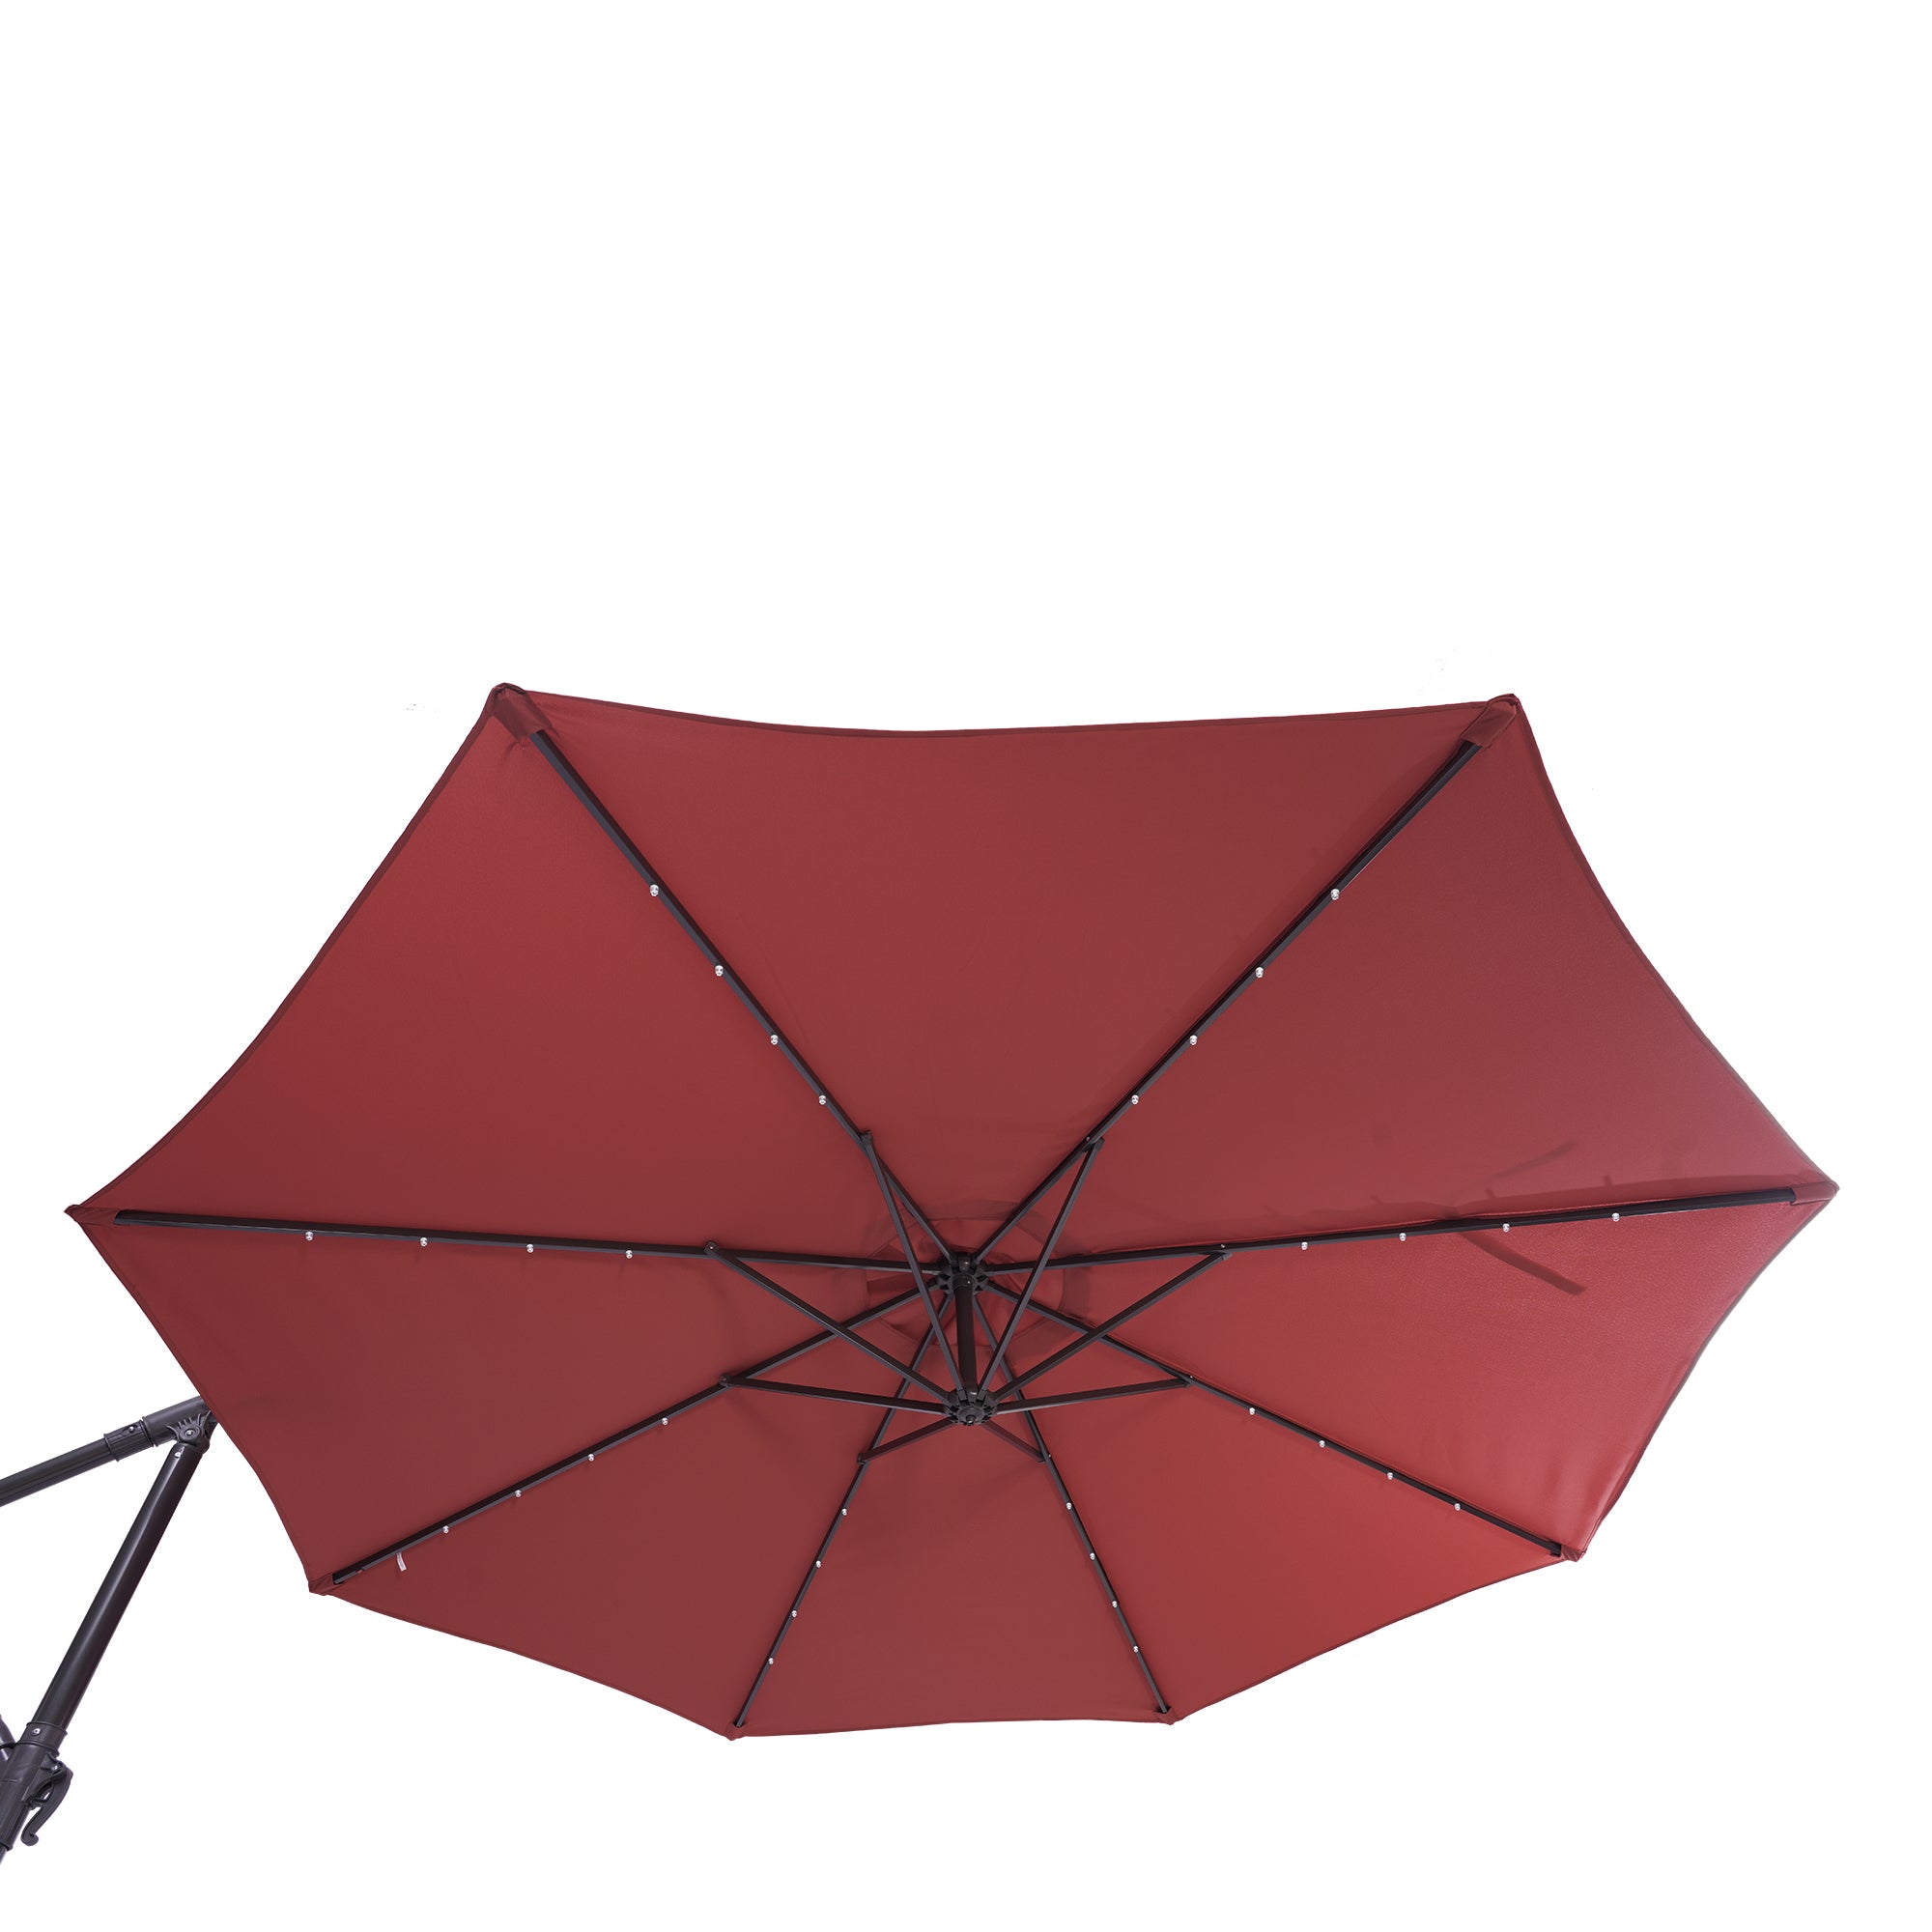 10 FT Solar LED Patio Outdoor Umbrella Hanging red-metal